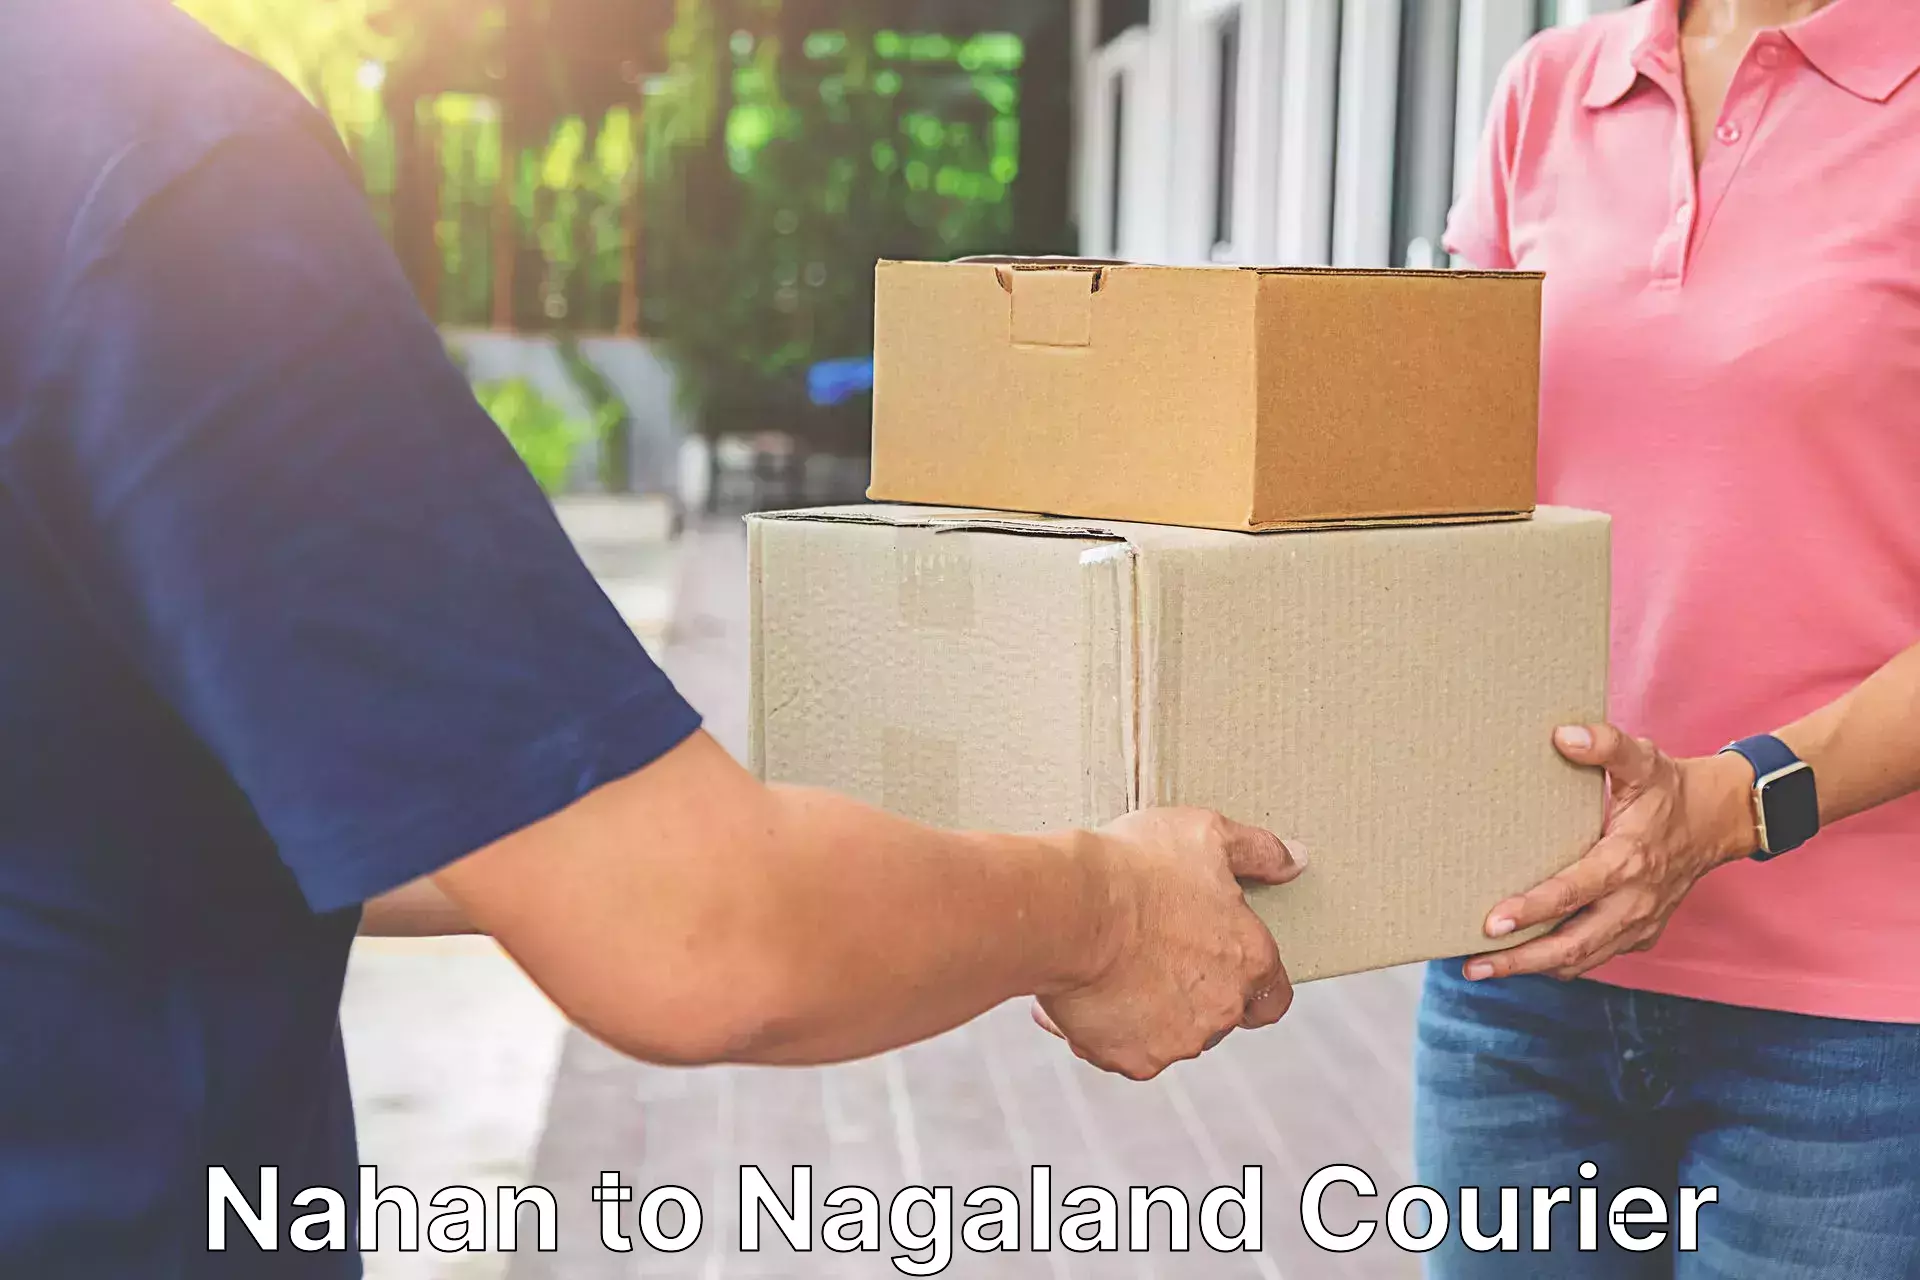 Enhanced tracking features Nahan to Nagaland